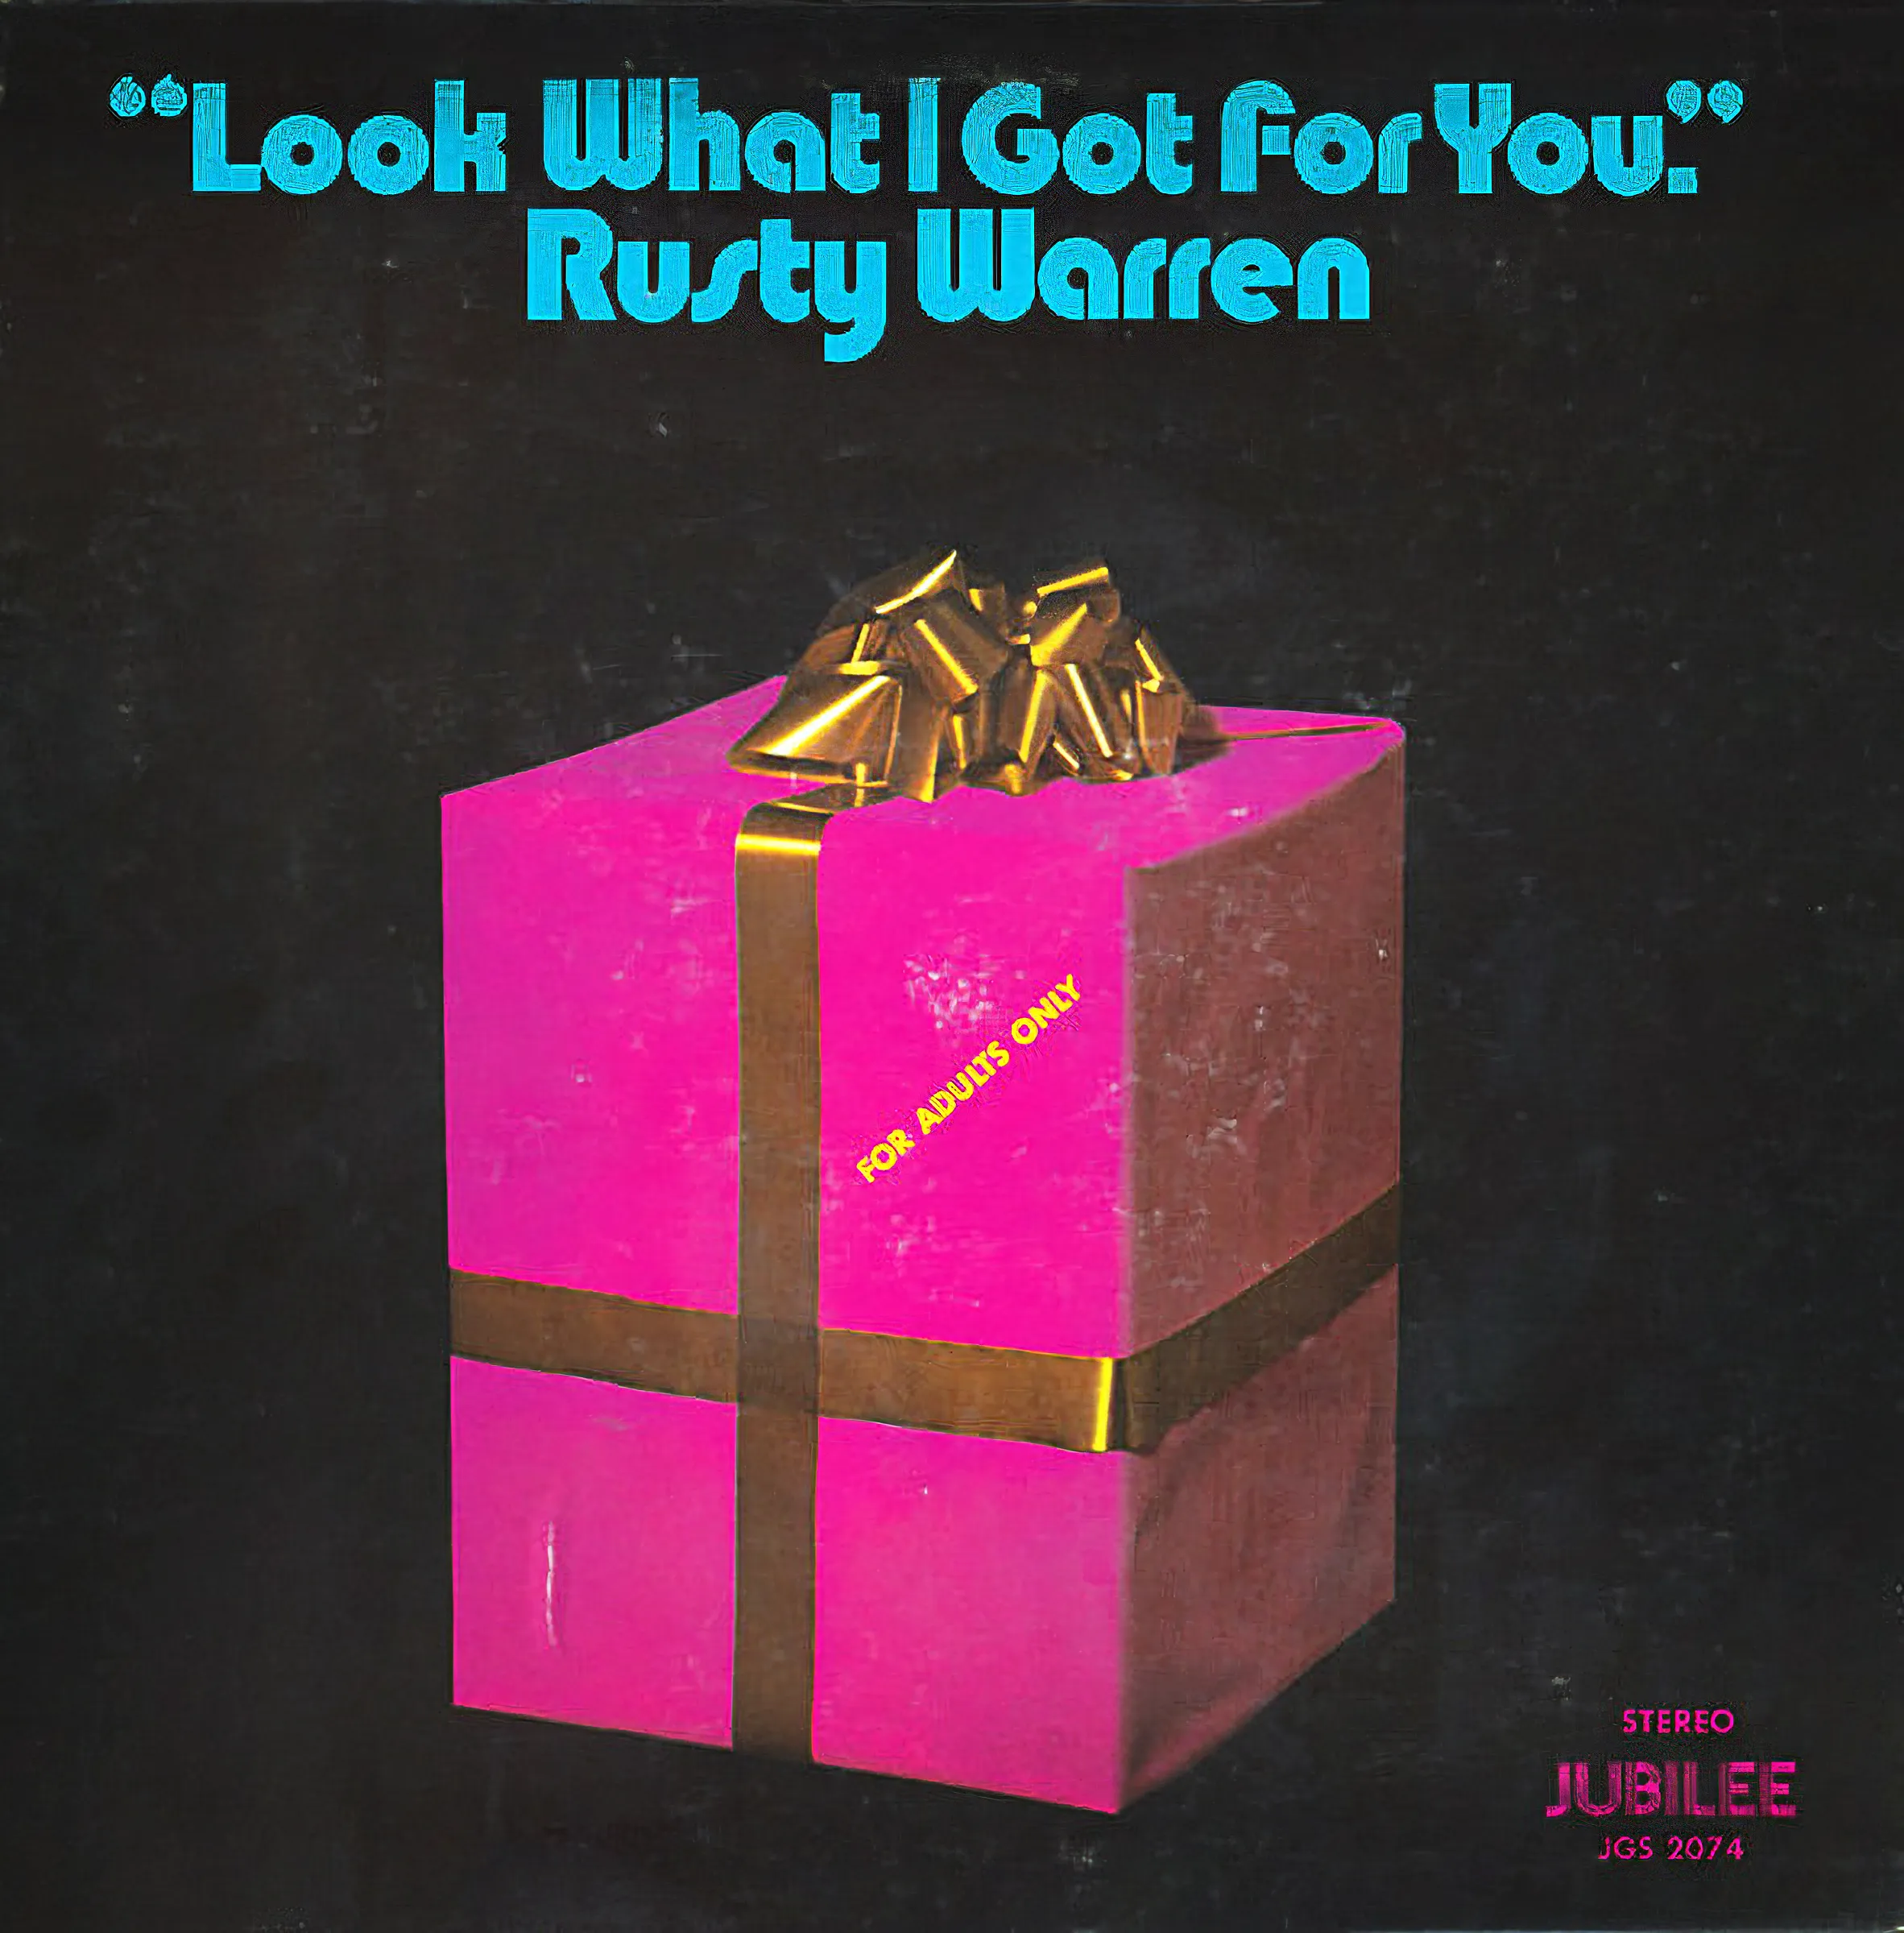 Rusty Warren album cover: Look What I Got for You.